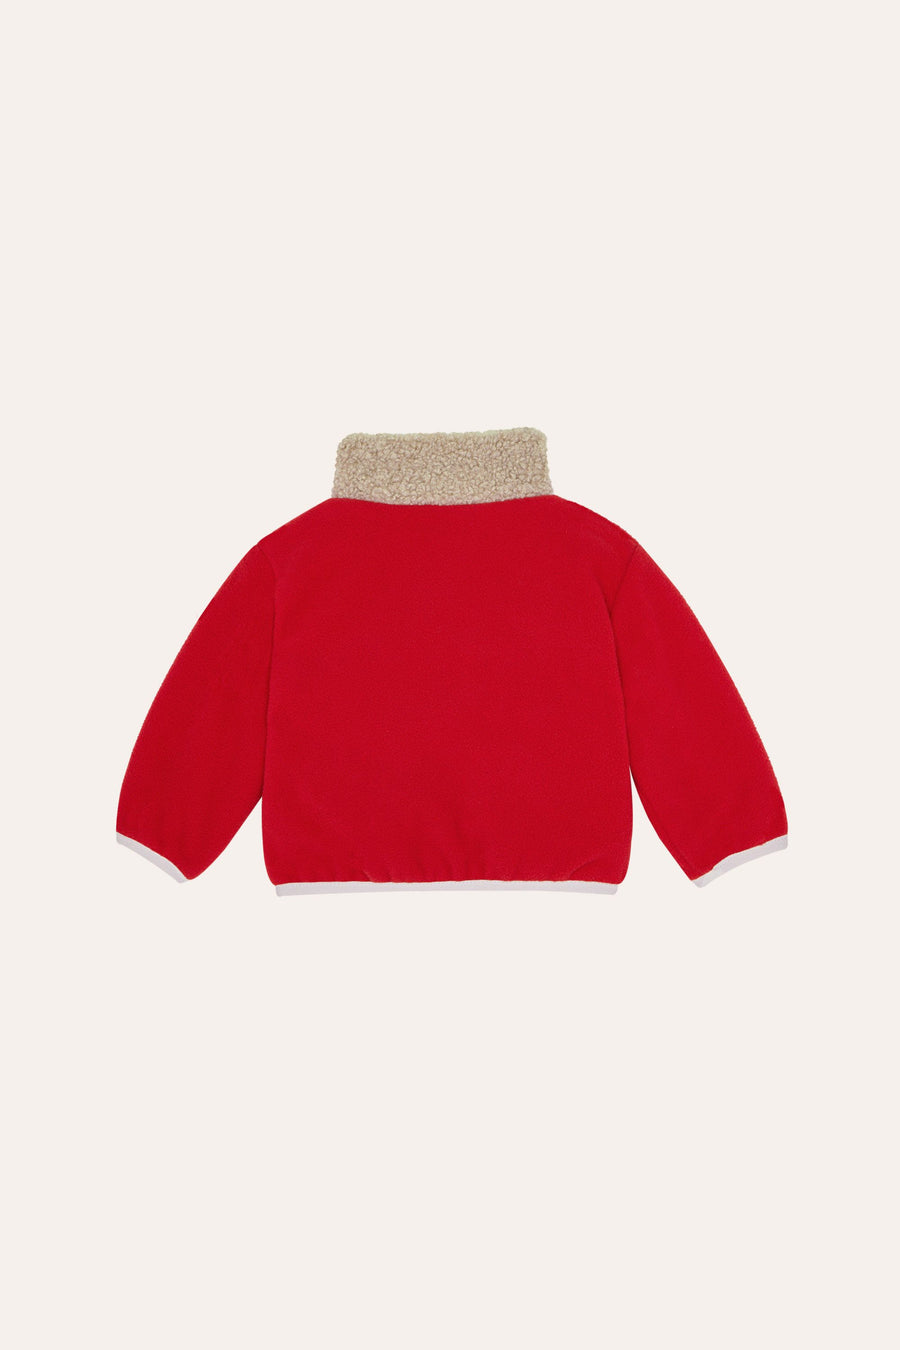 The Campamento - baby polar jacket - red